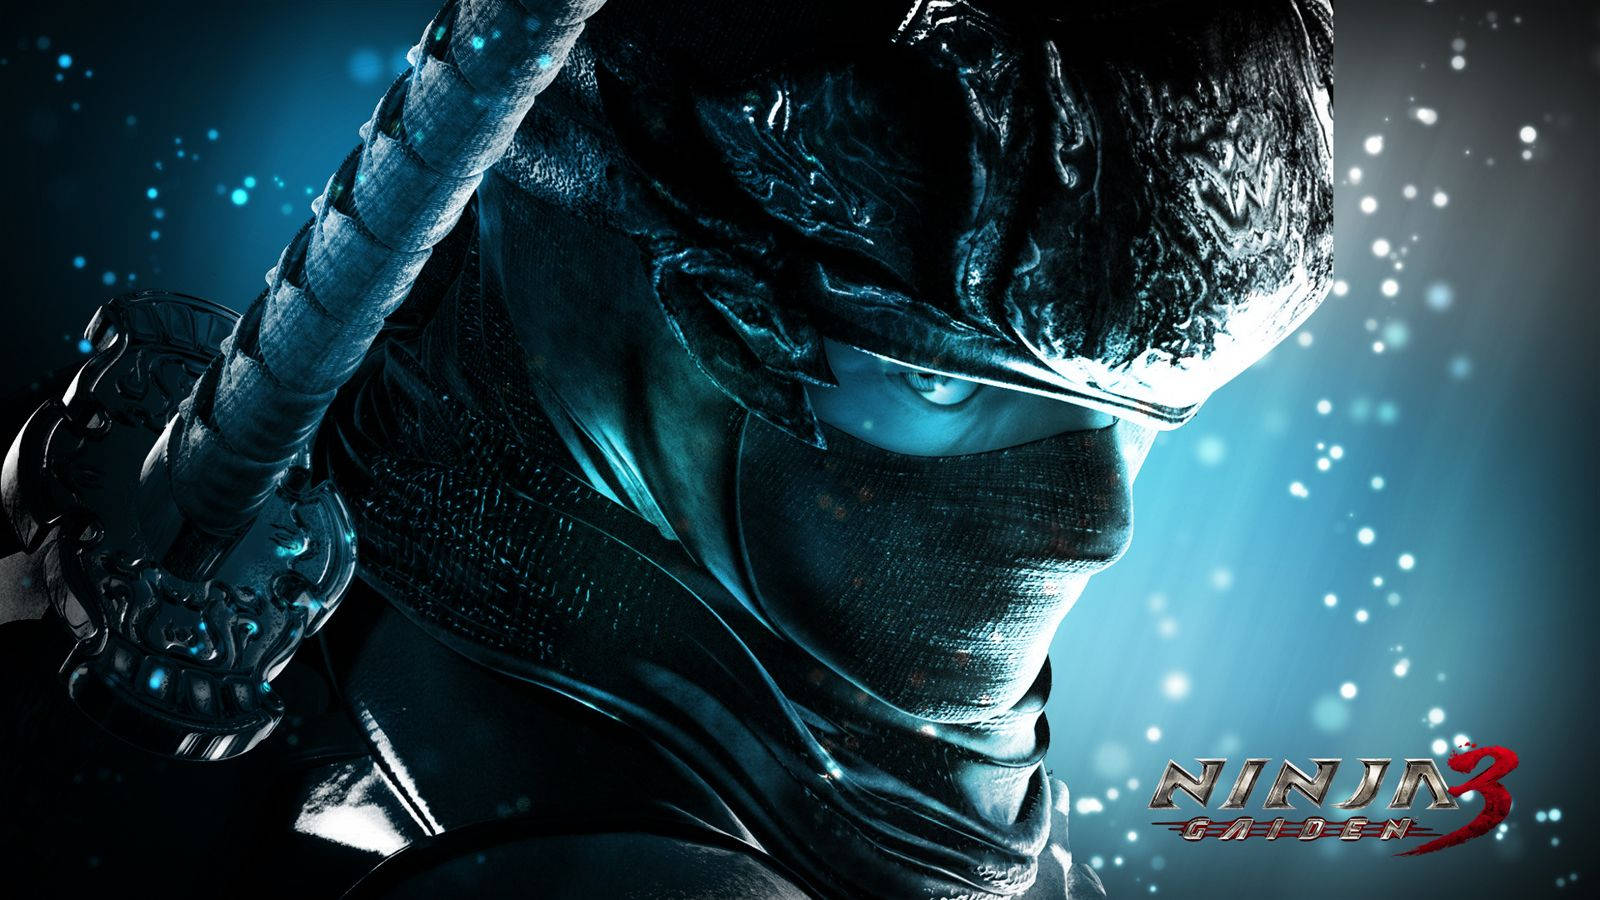 Ninja Gaiden 3 Slash Game Poster Picture